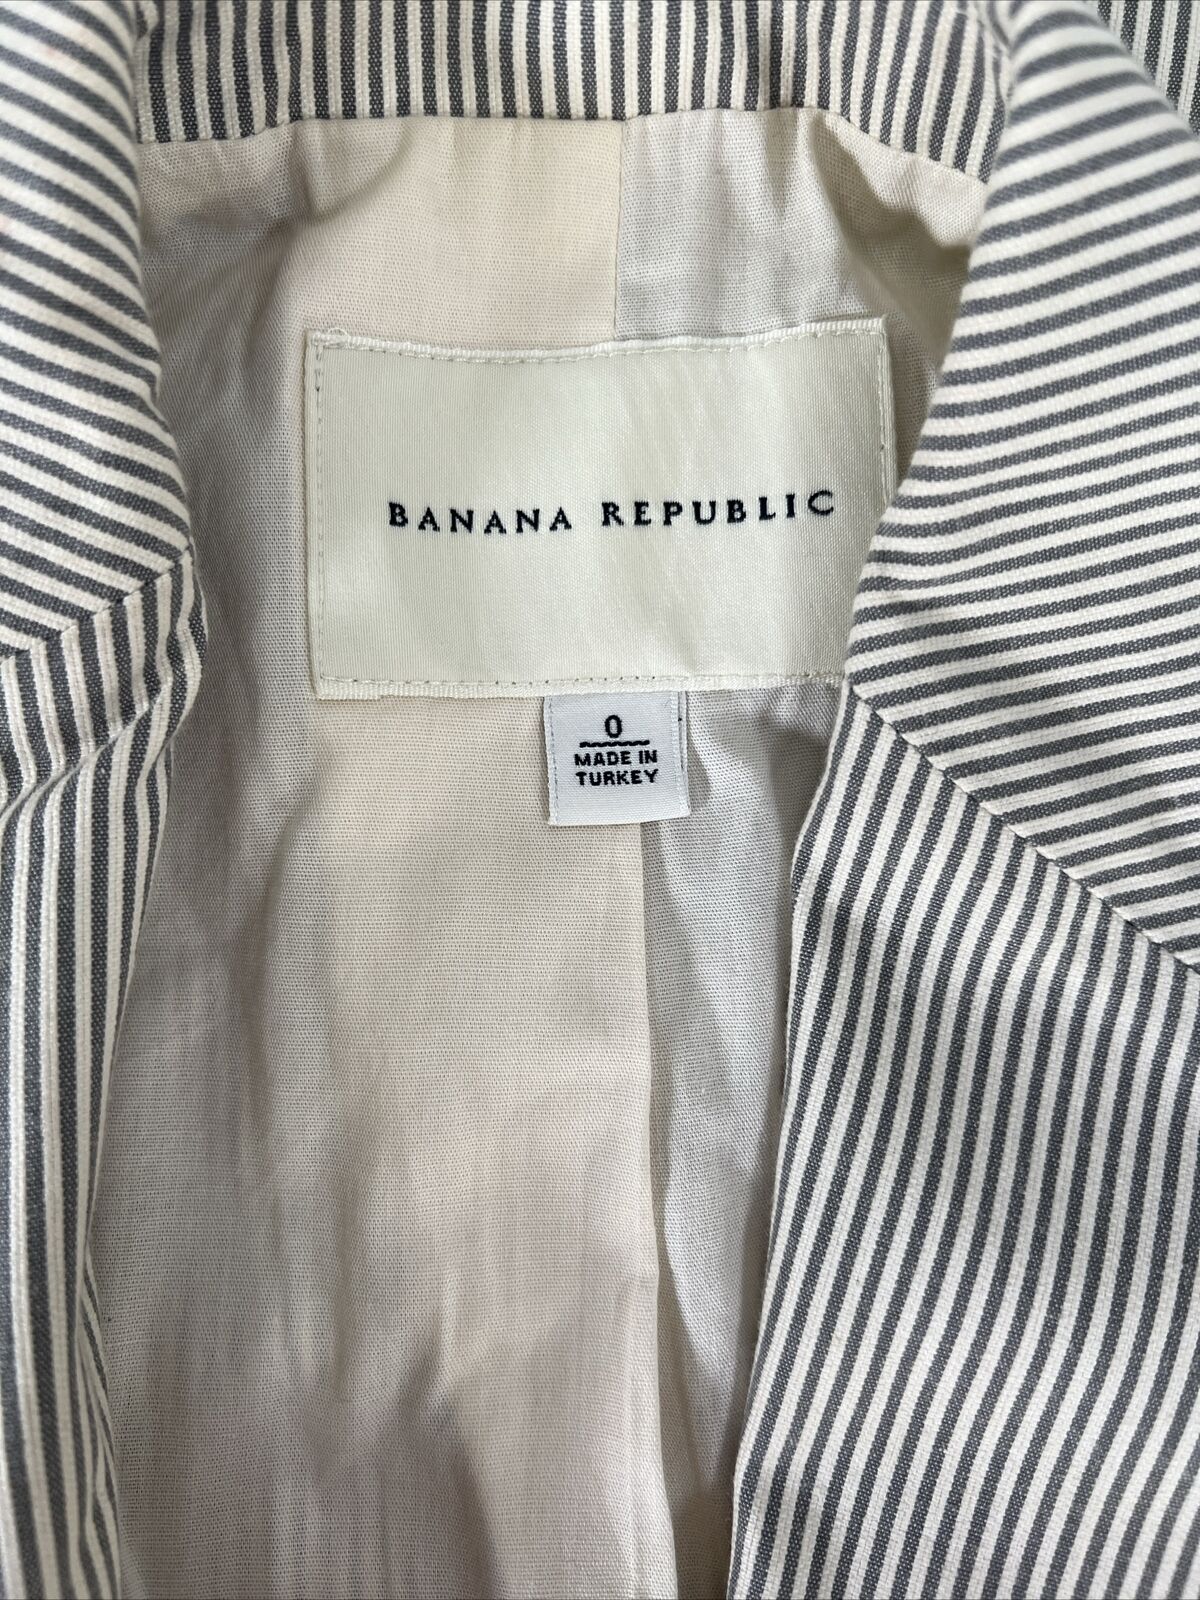 Banana Republic Women's Gray/Ivory Seersucker Striped Blazer - 0